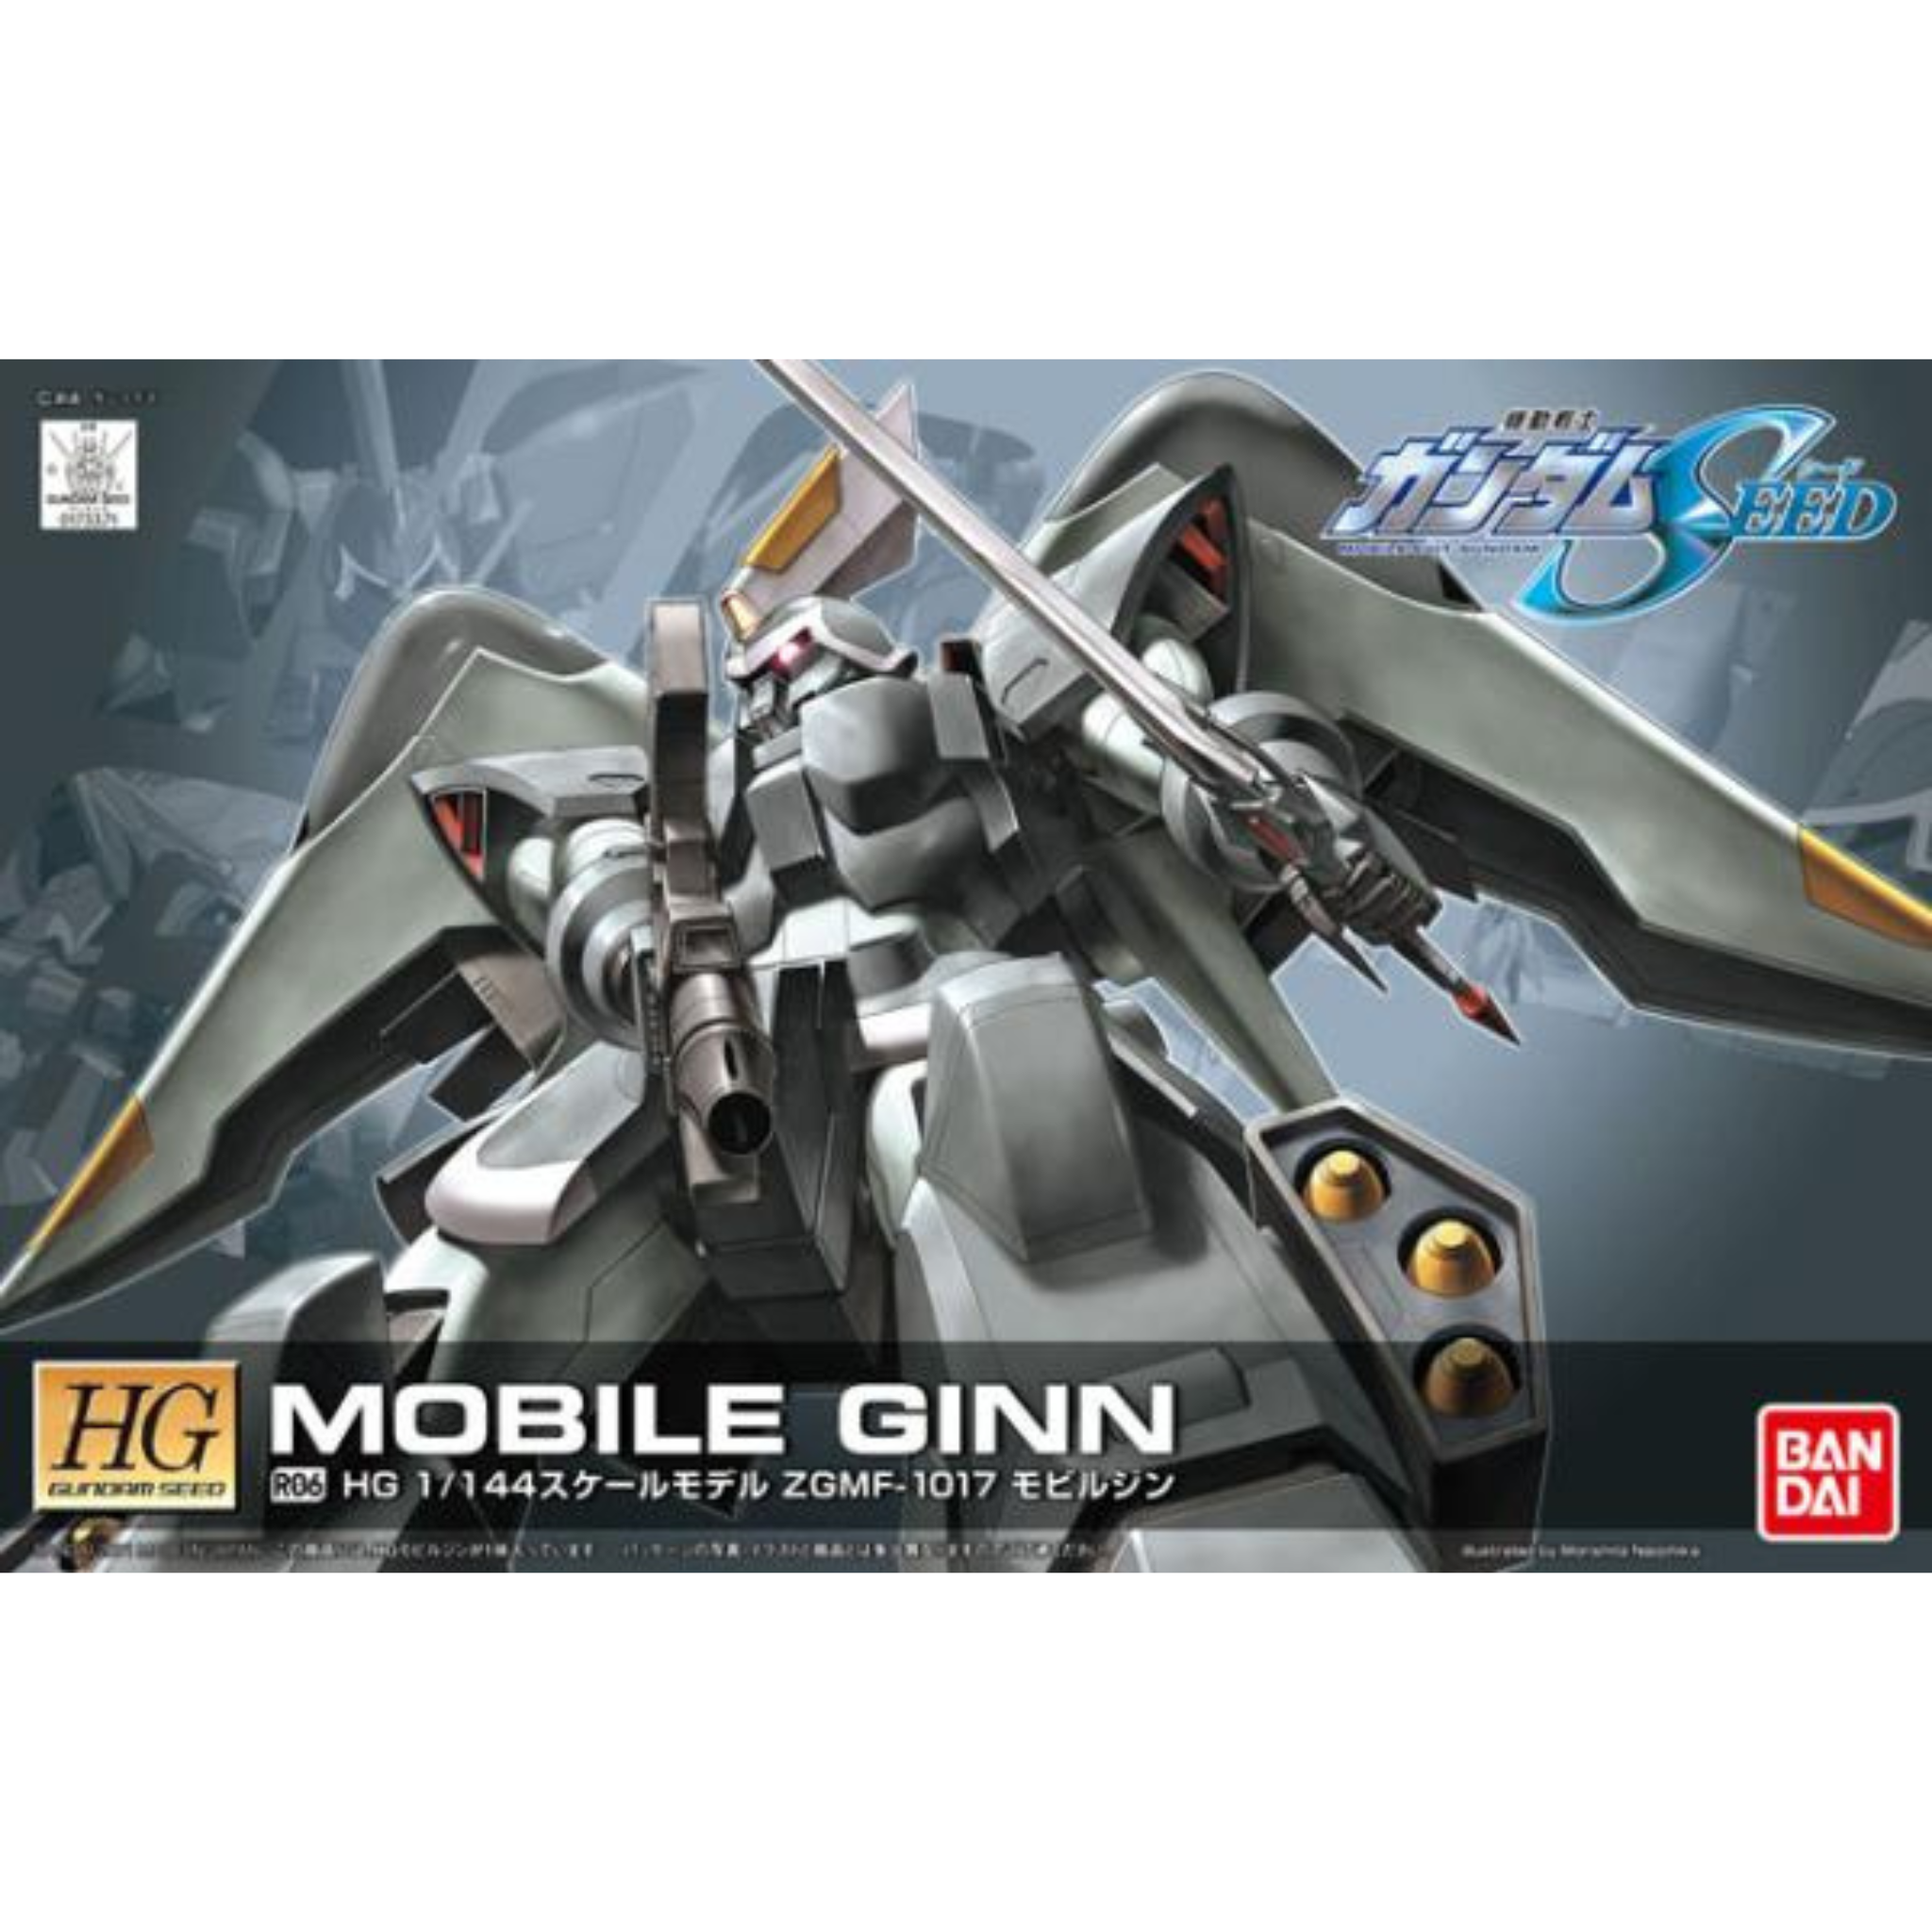 HG 1/144 SEED #R06 ZGMF-1017 Mobile Ginn #0173371 by Bandai